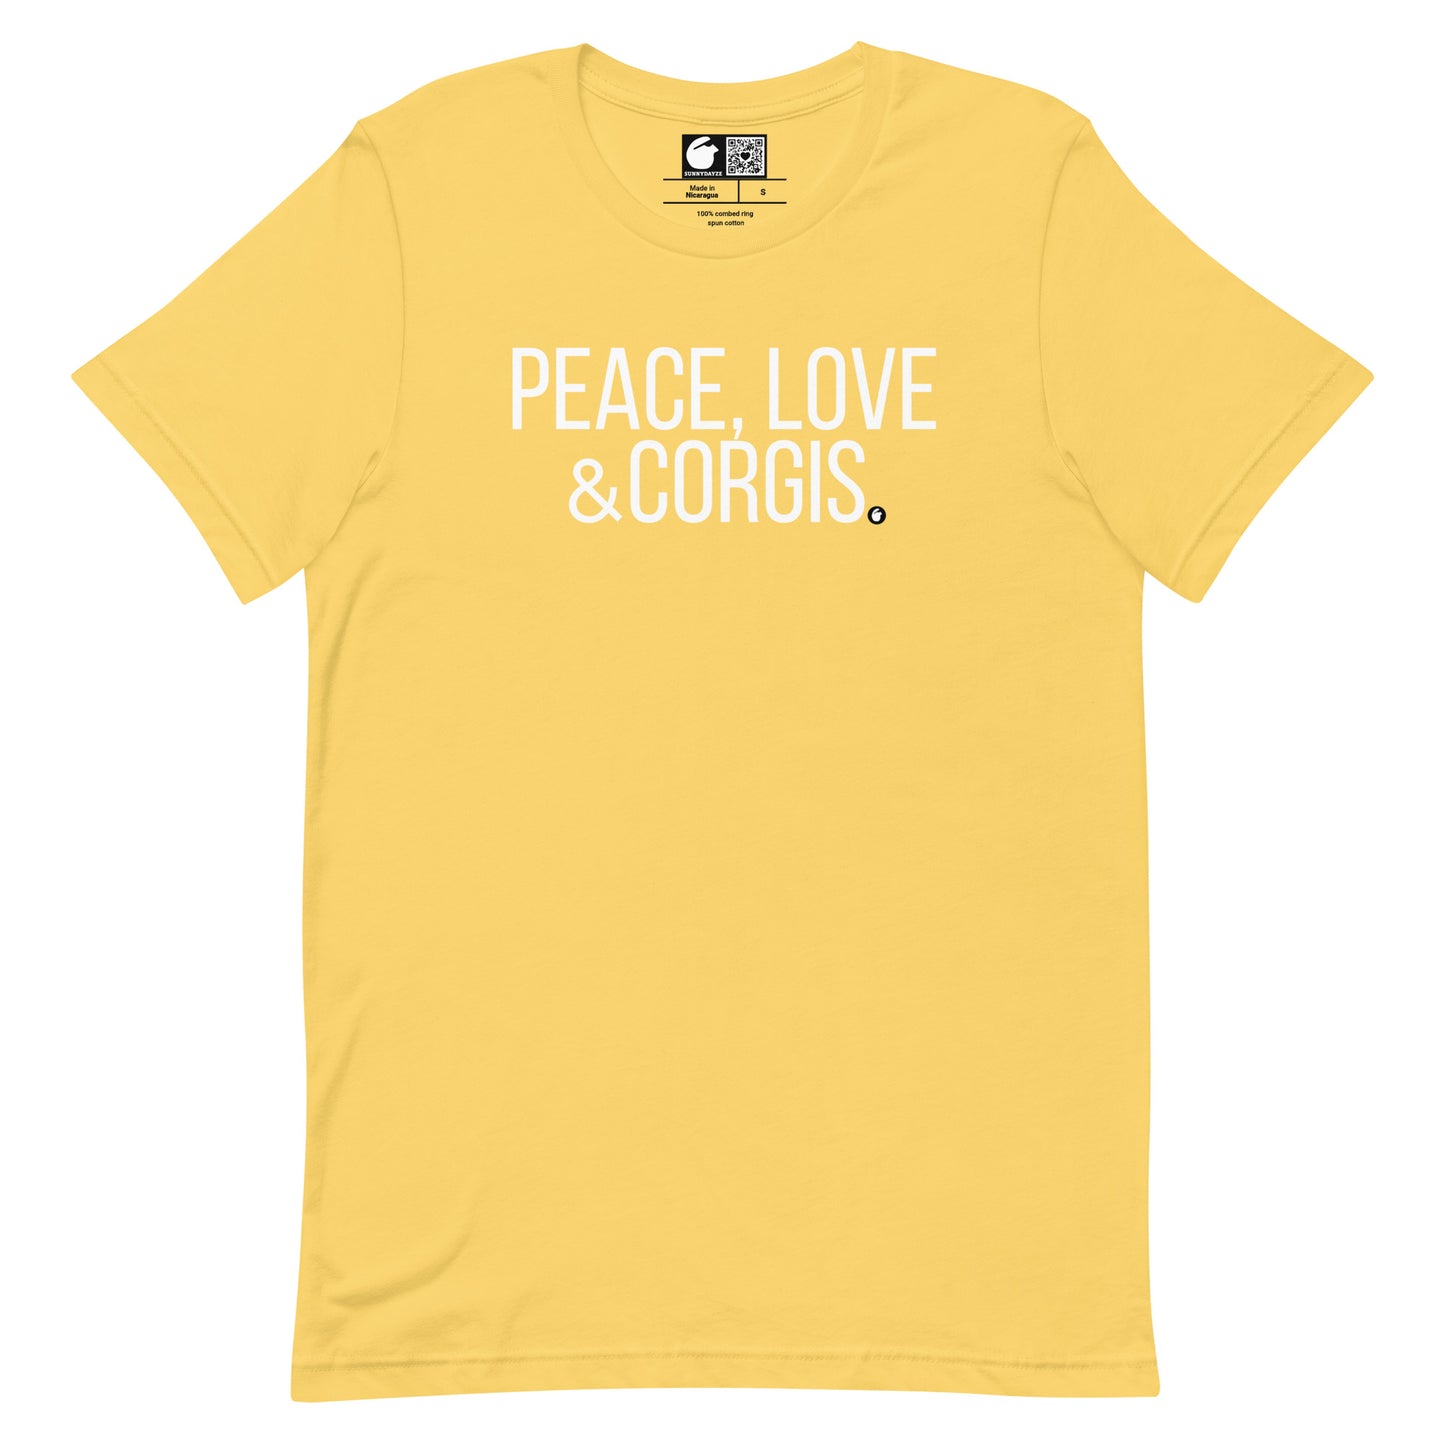 CORGIS Short-Sleeve Unisex t-shirt